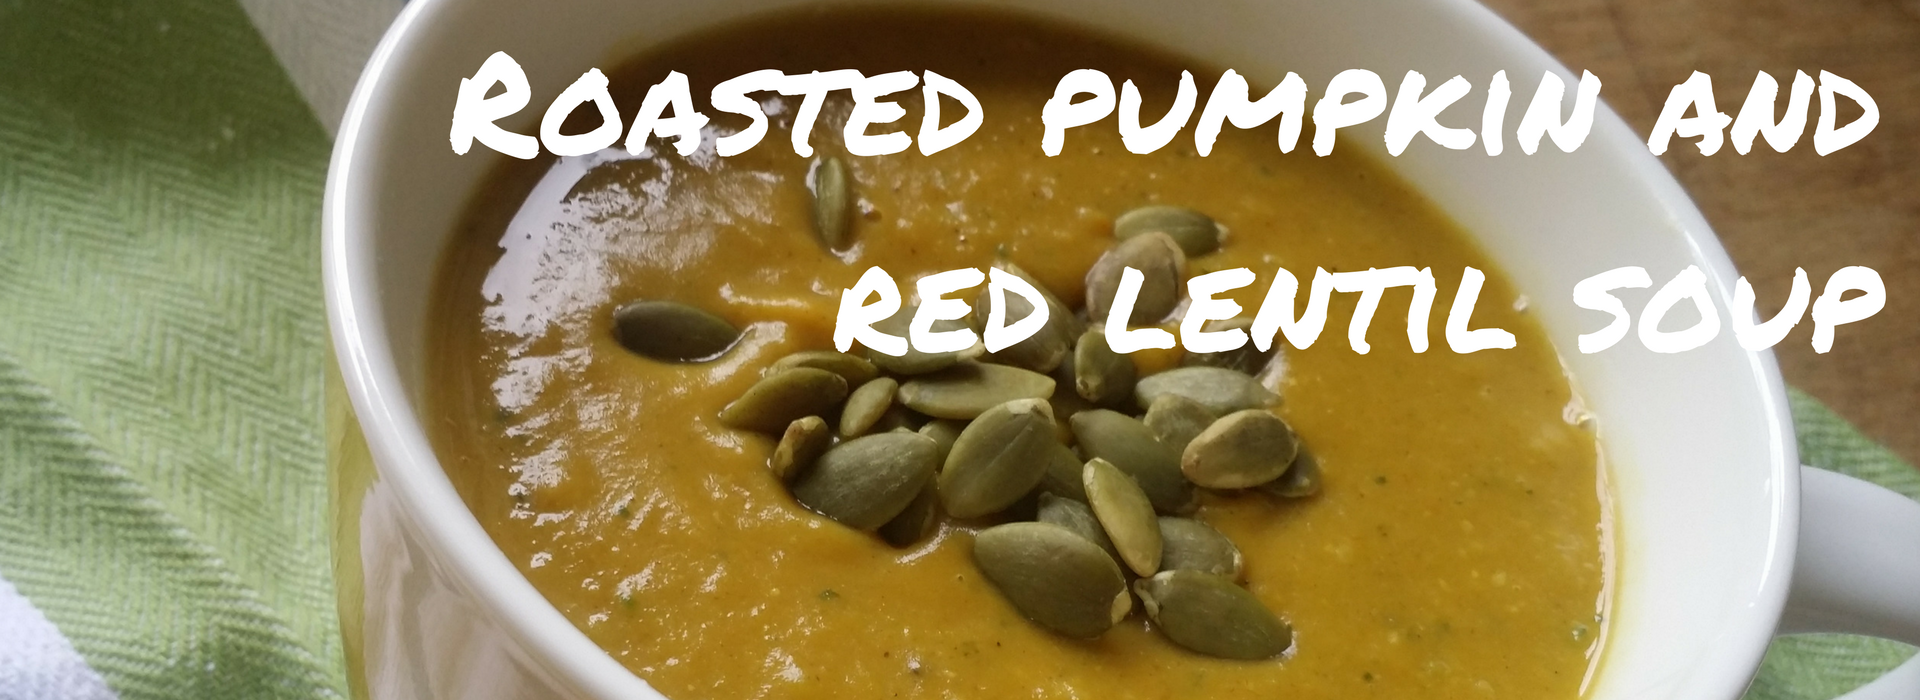 Roasted Pumpkin and Red Lentil Soup